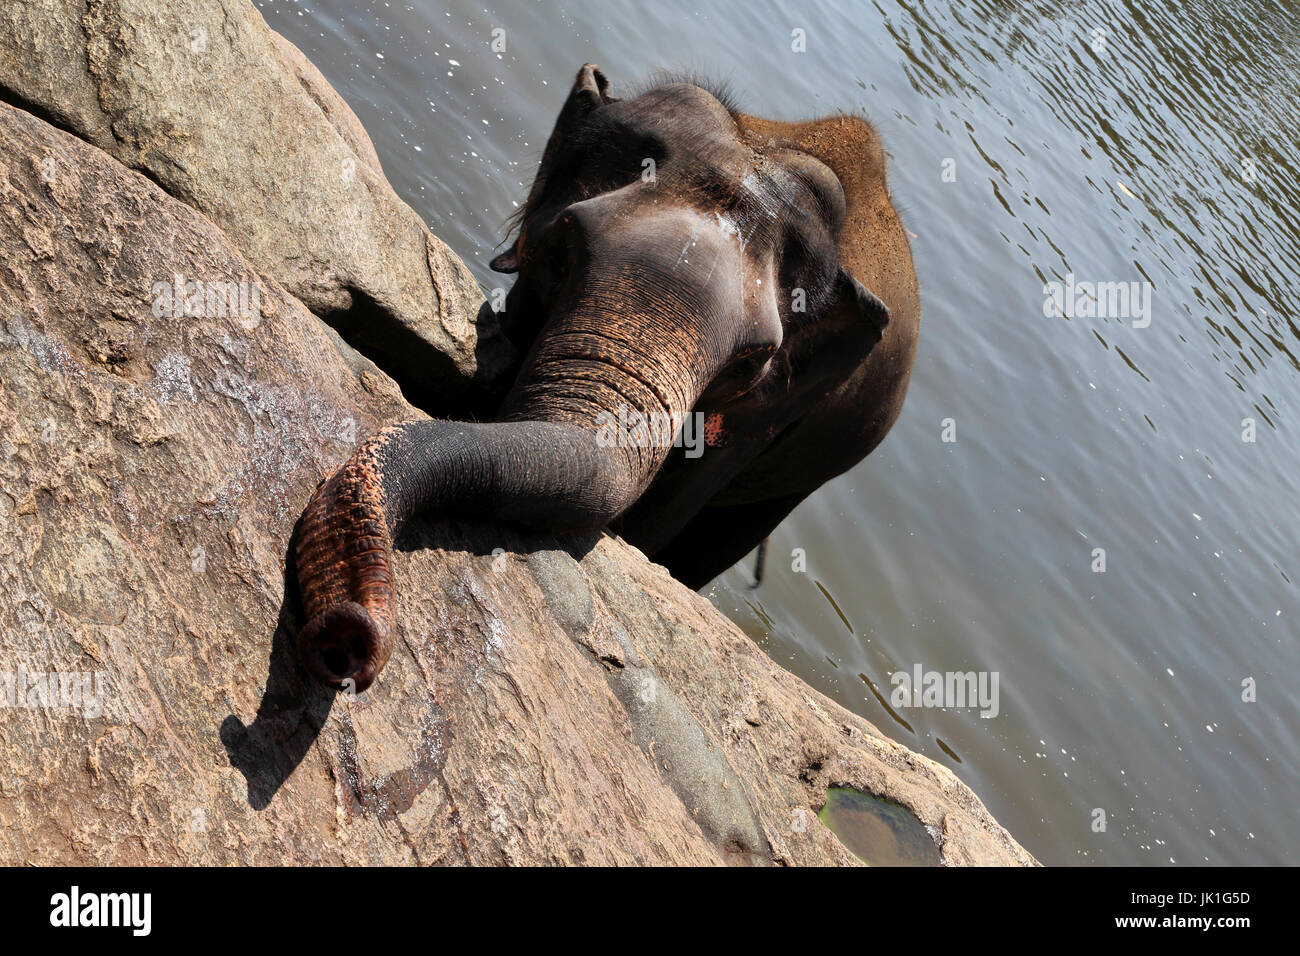 La Province centrale Pinnawala Sri Lanka orphelinat Pinnawala Elephant elephant bathing in'Oya Ma River Banque D'Images